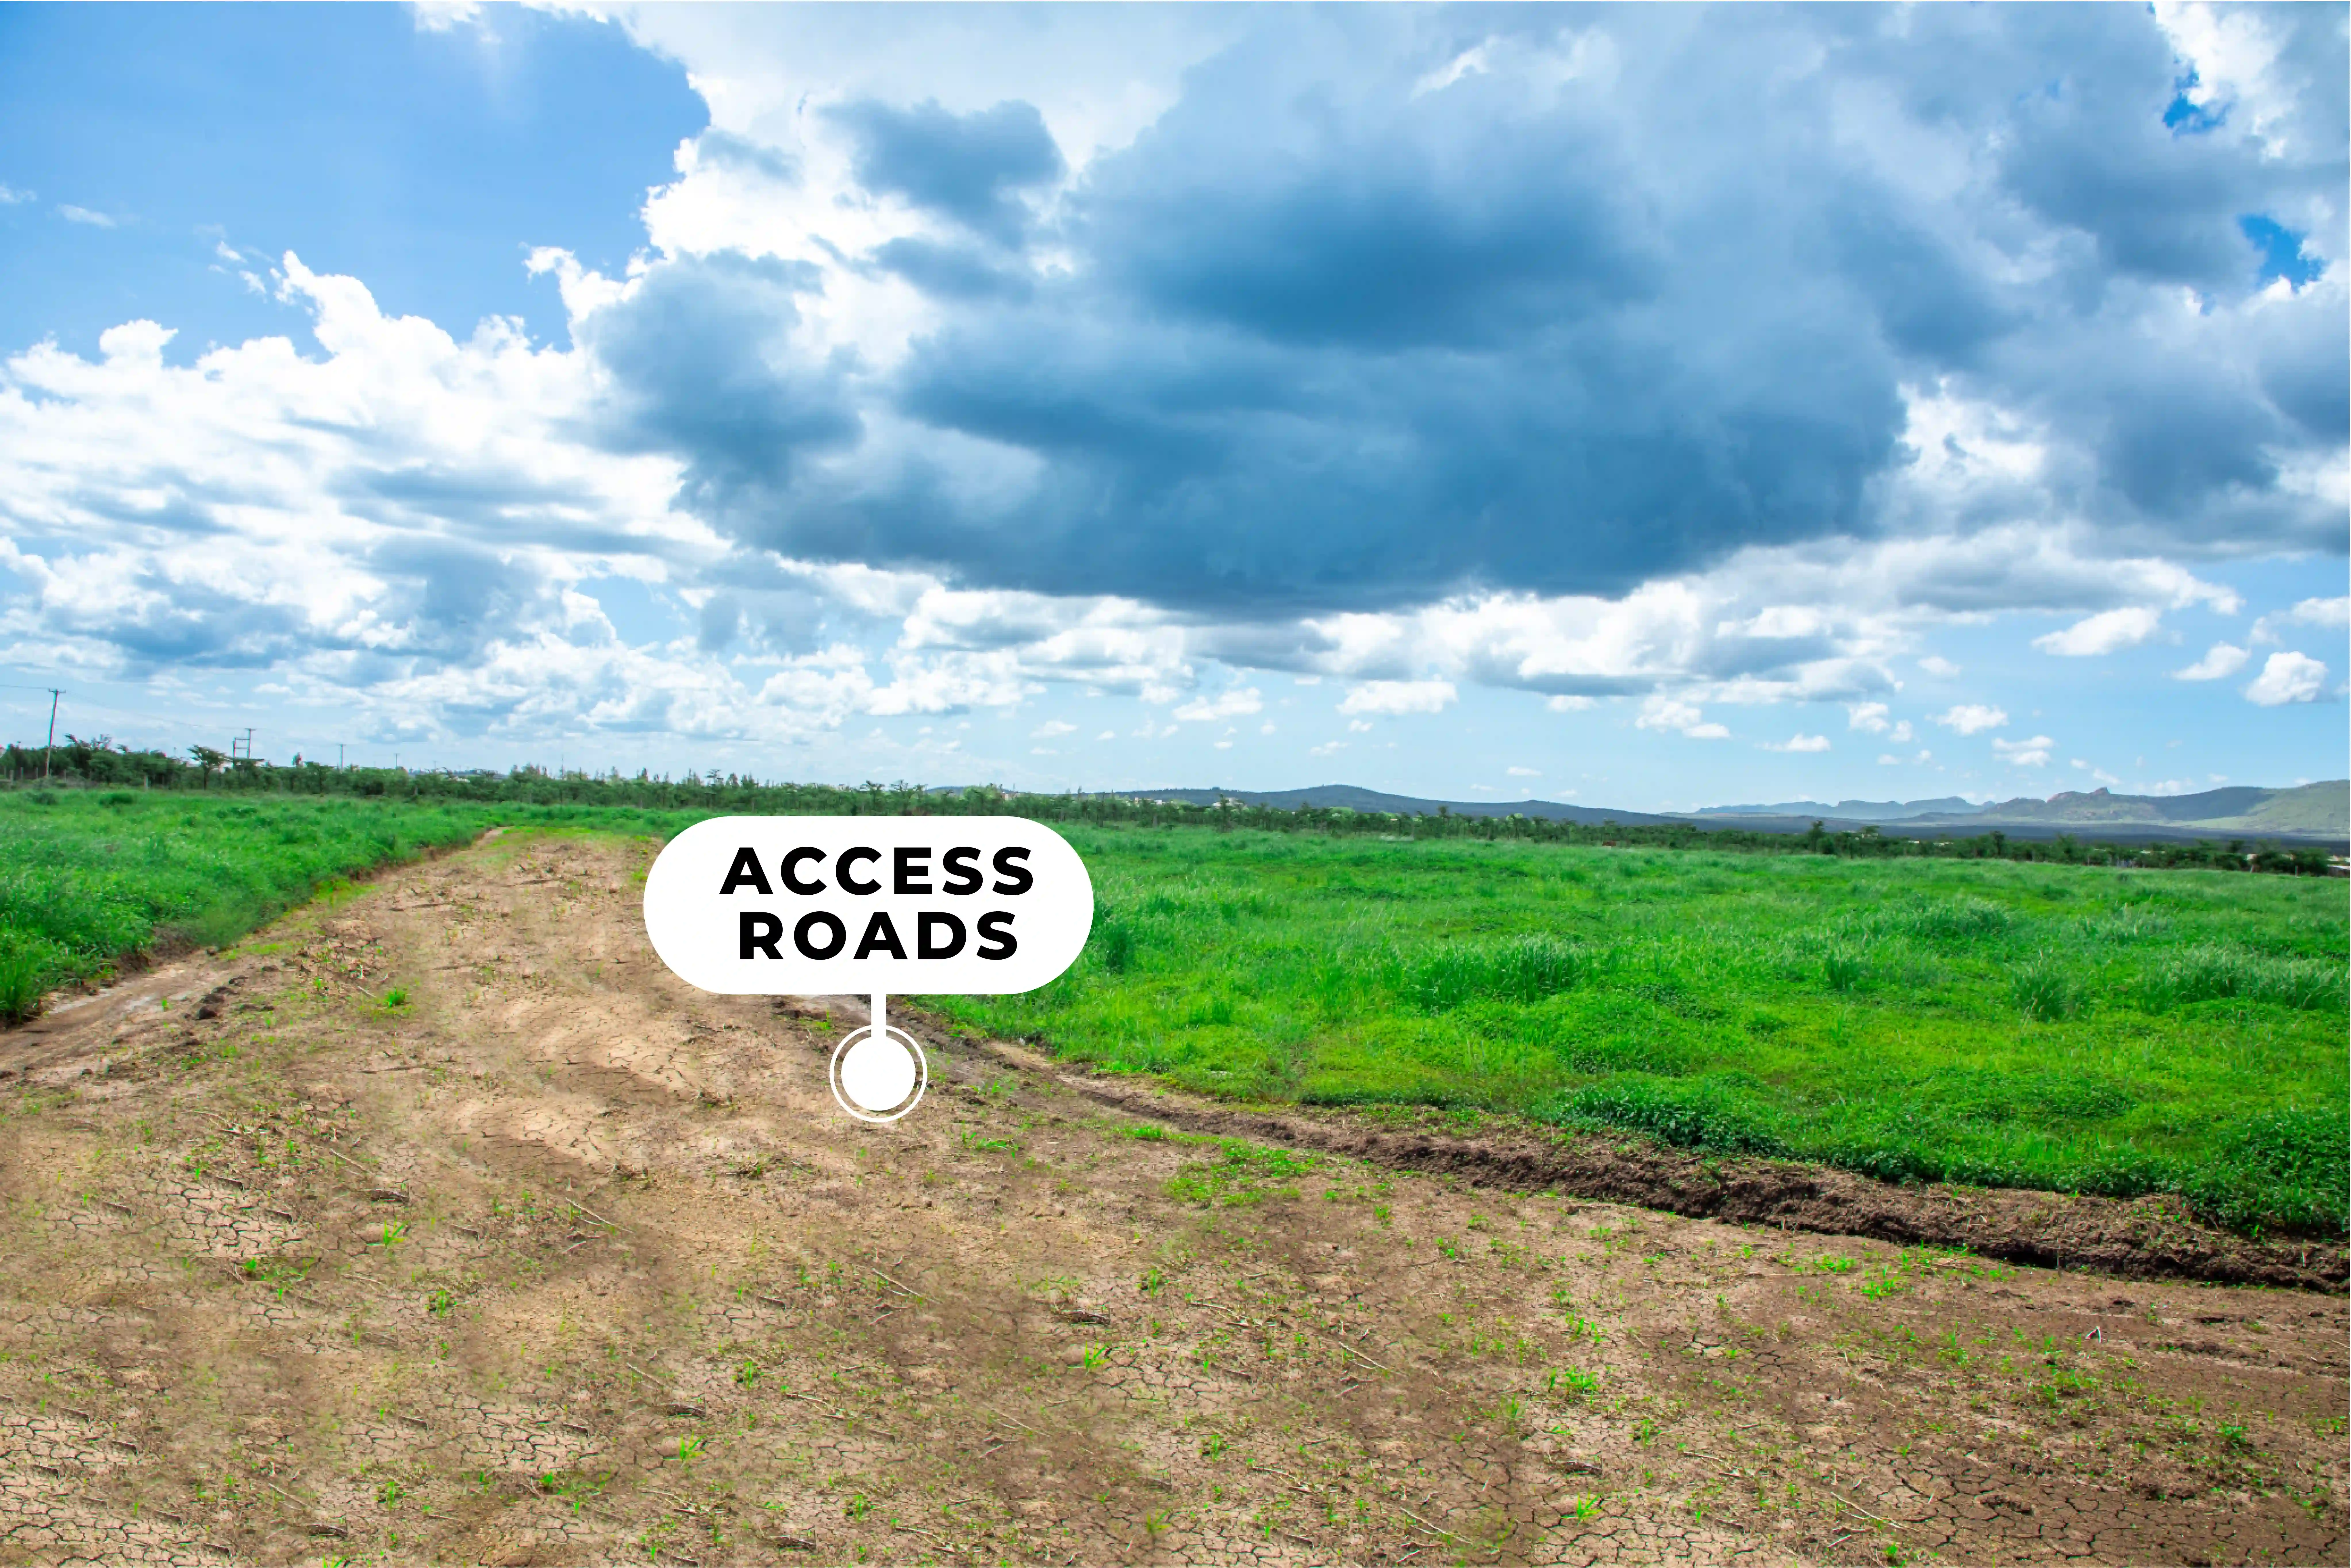 Ol Saruni access roads